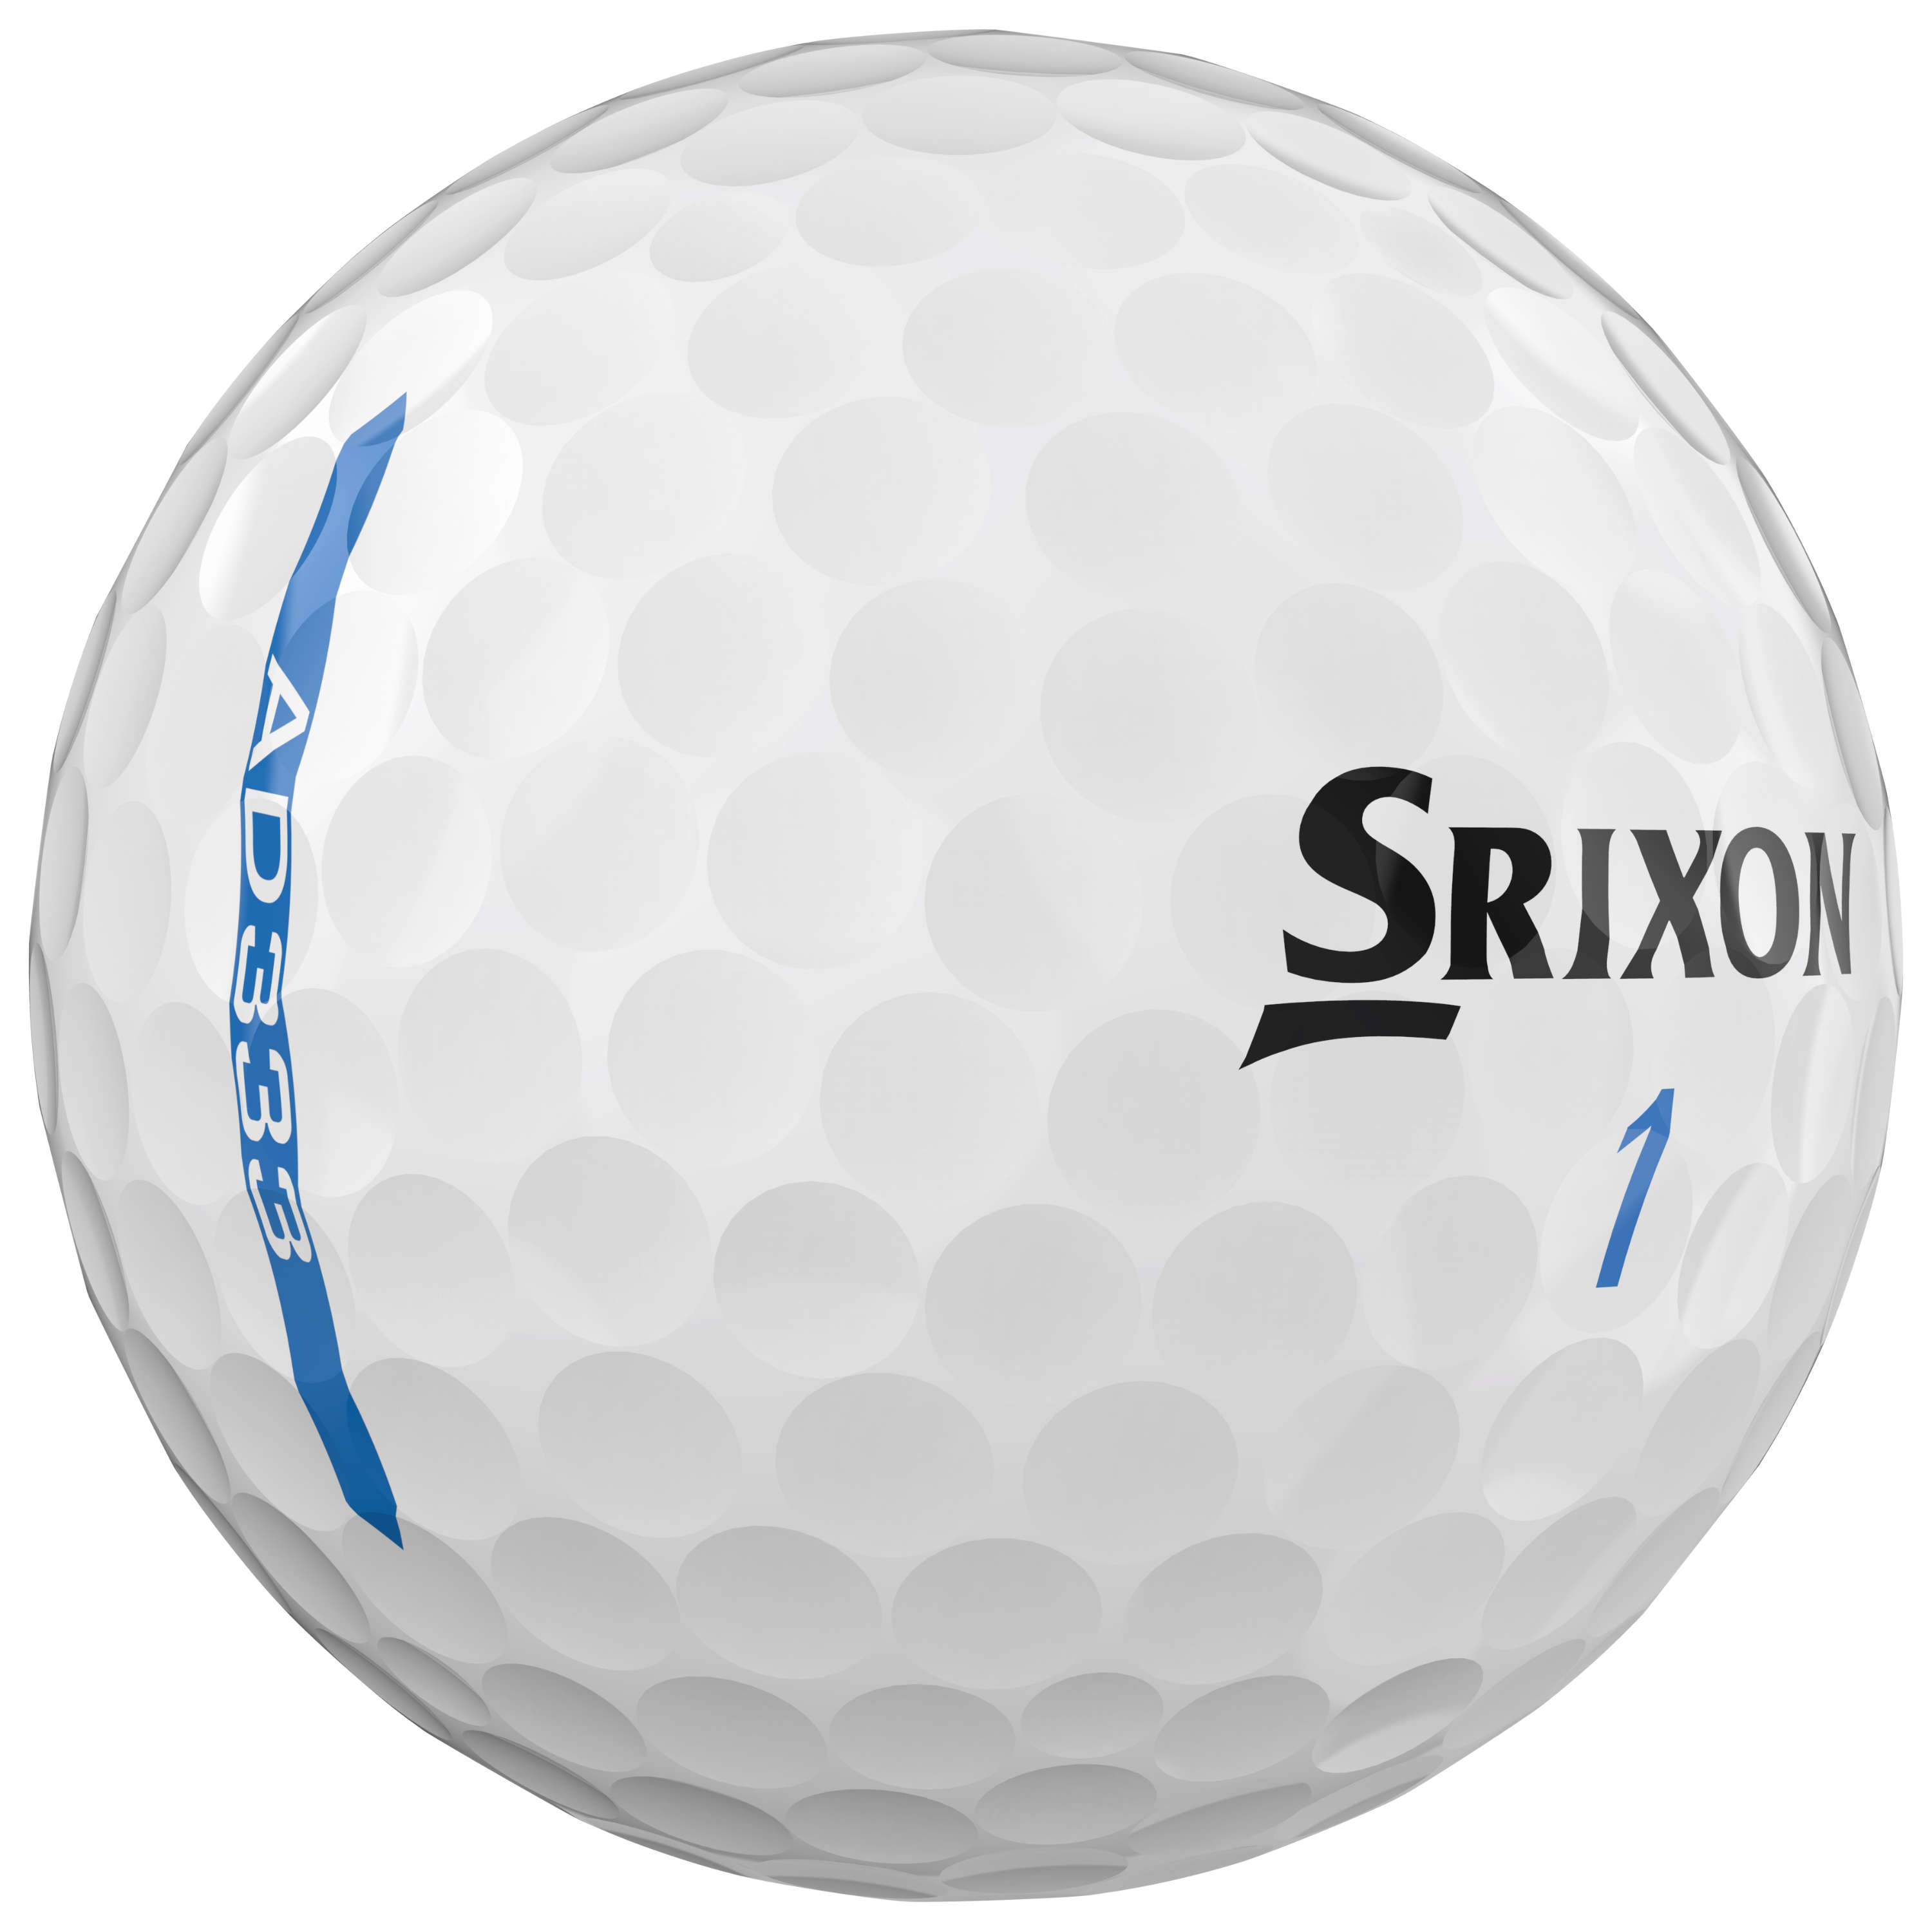 Srixon AD333 Golfbälle